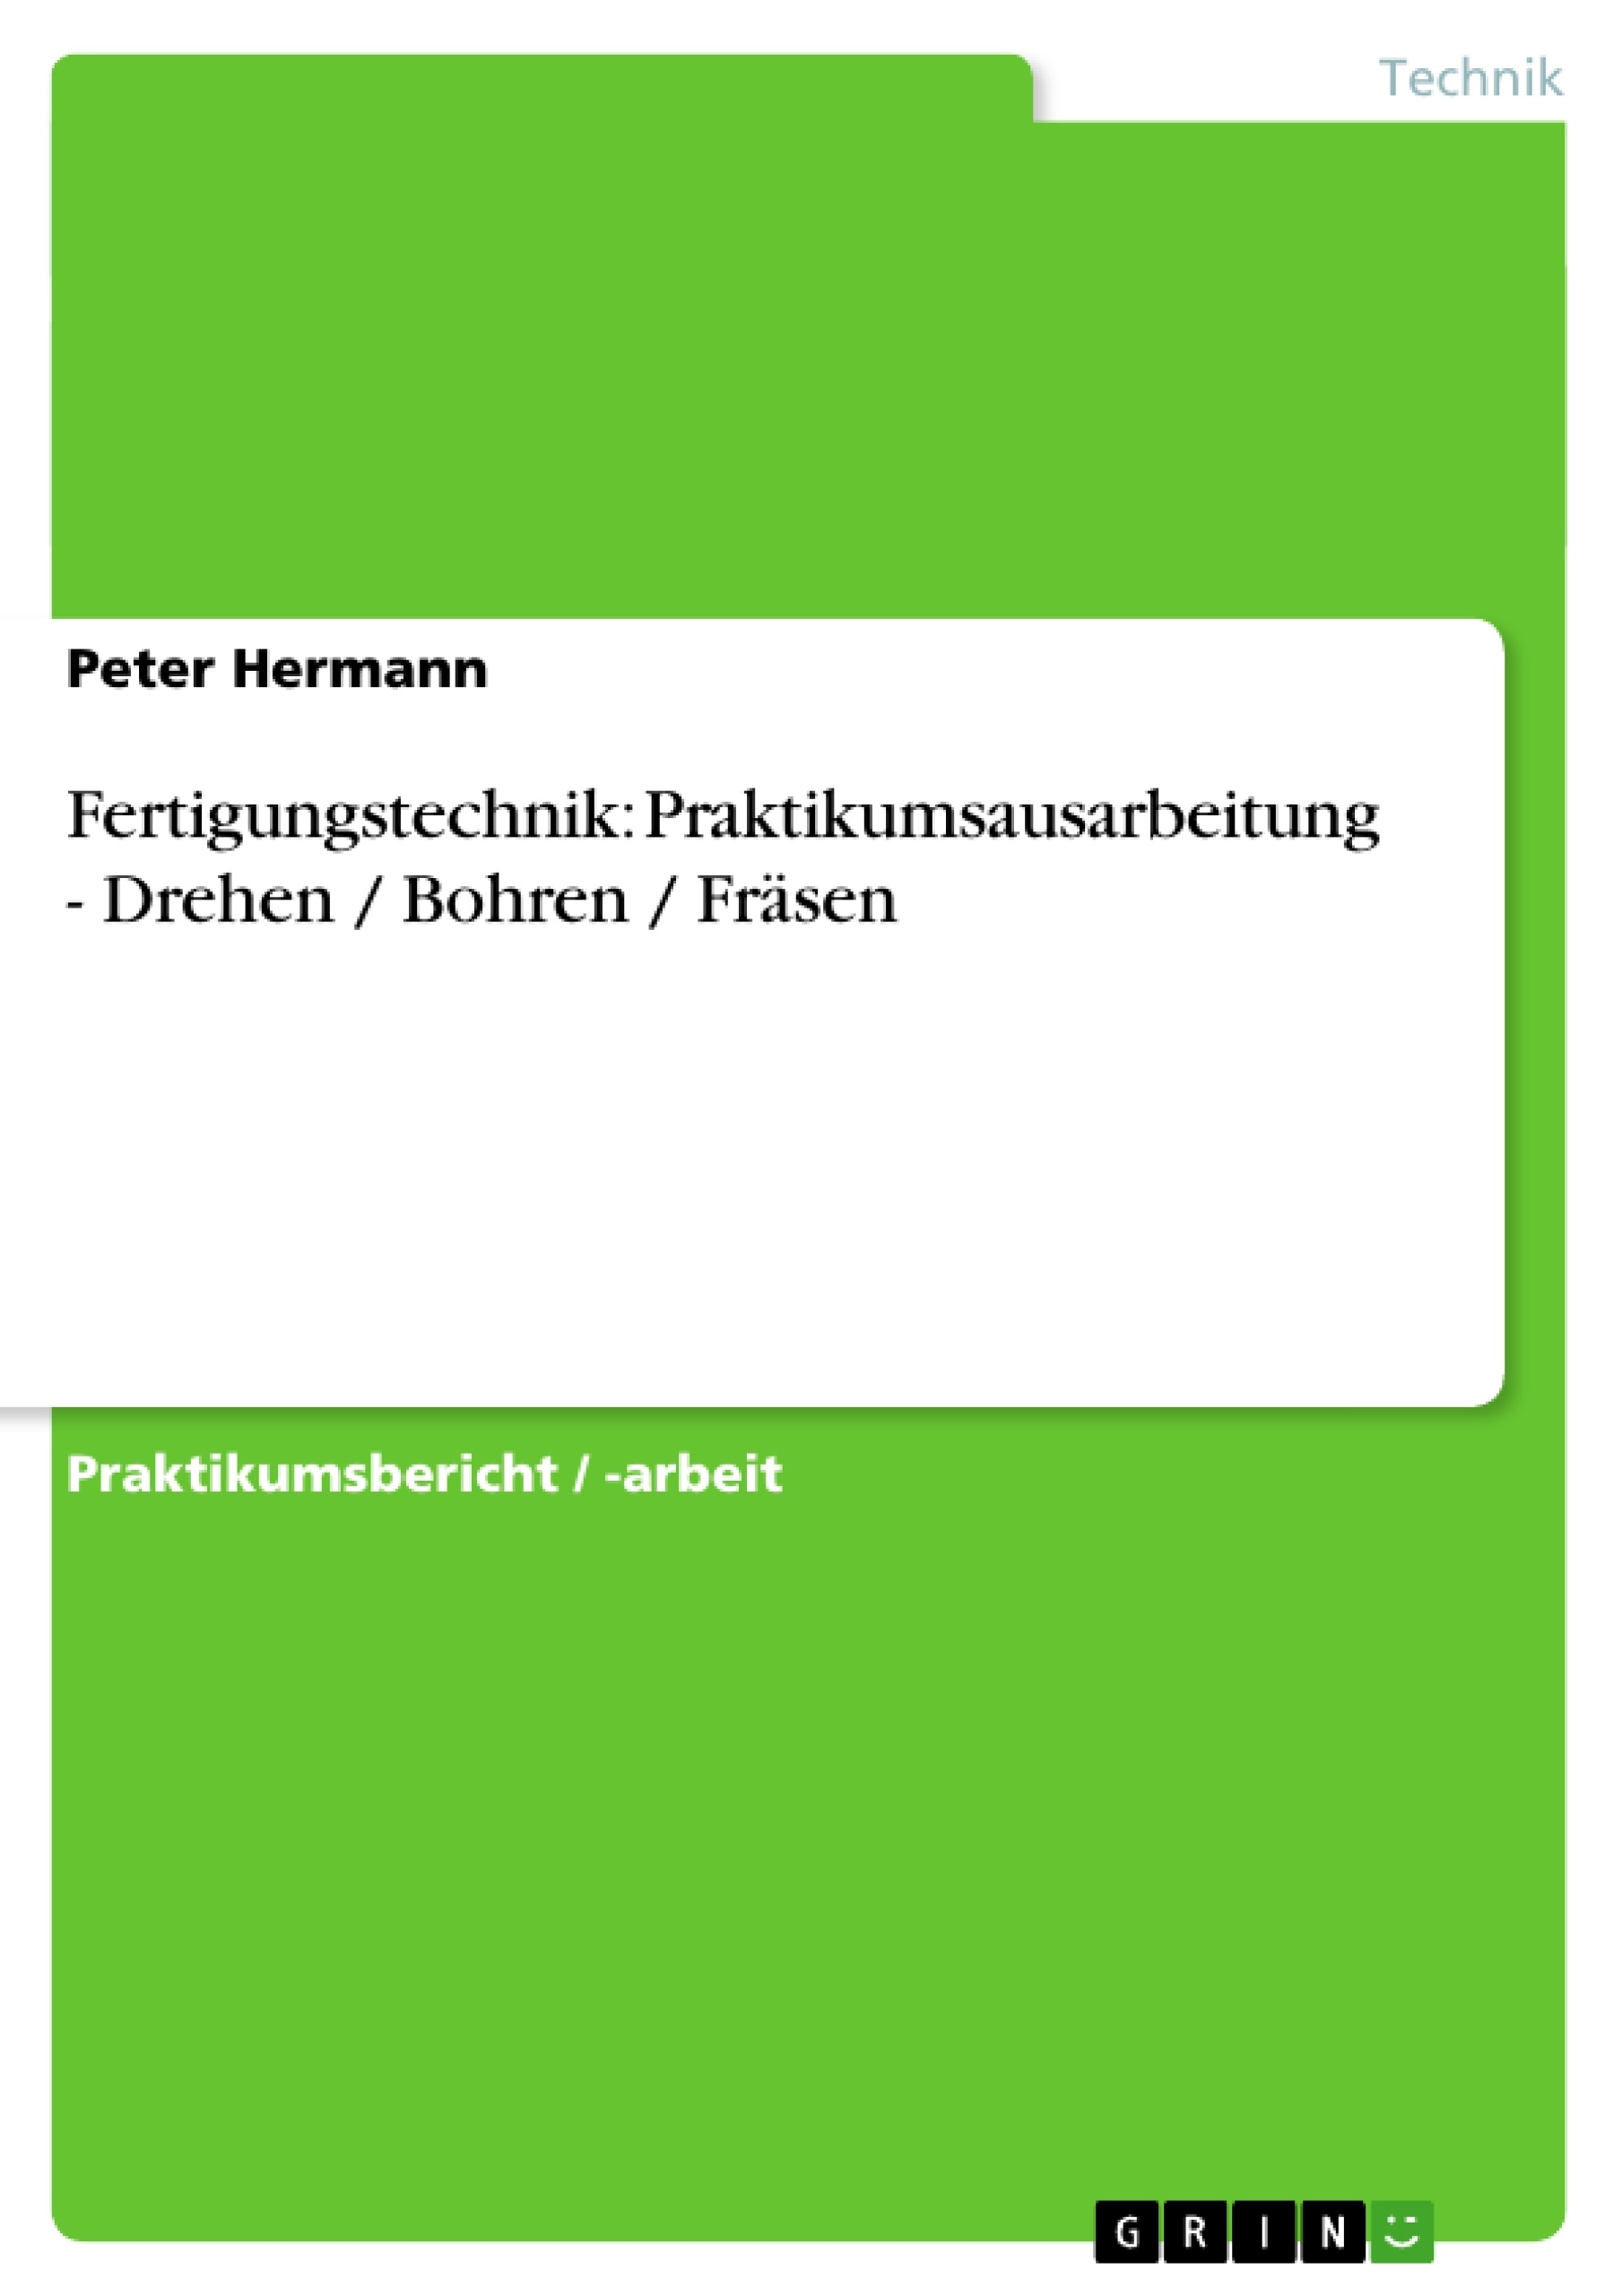 Titre: Fertigungstechnik: Praktikumsausarbeitung - Drehen / Bohren / Fräsen